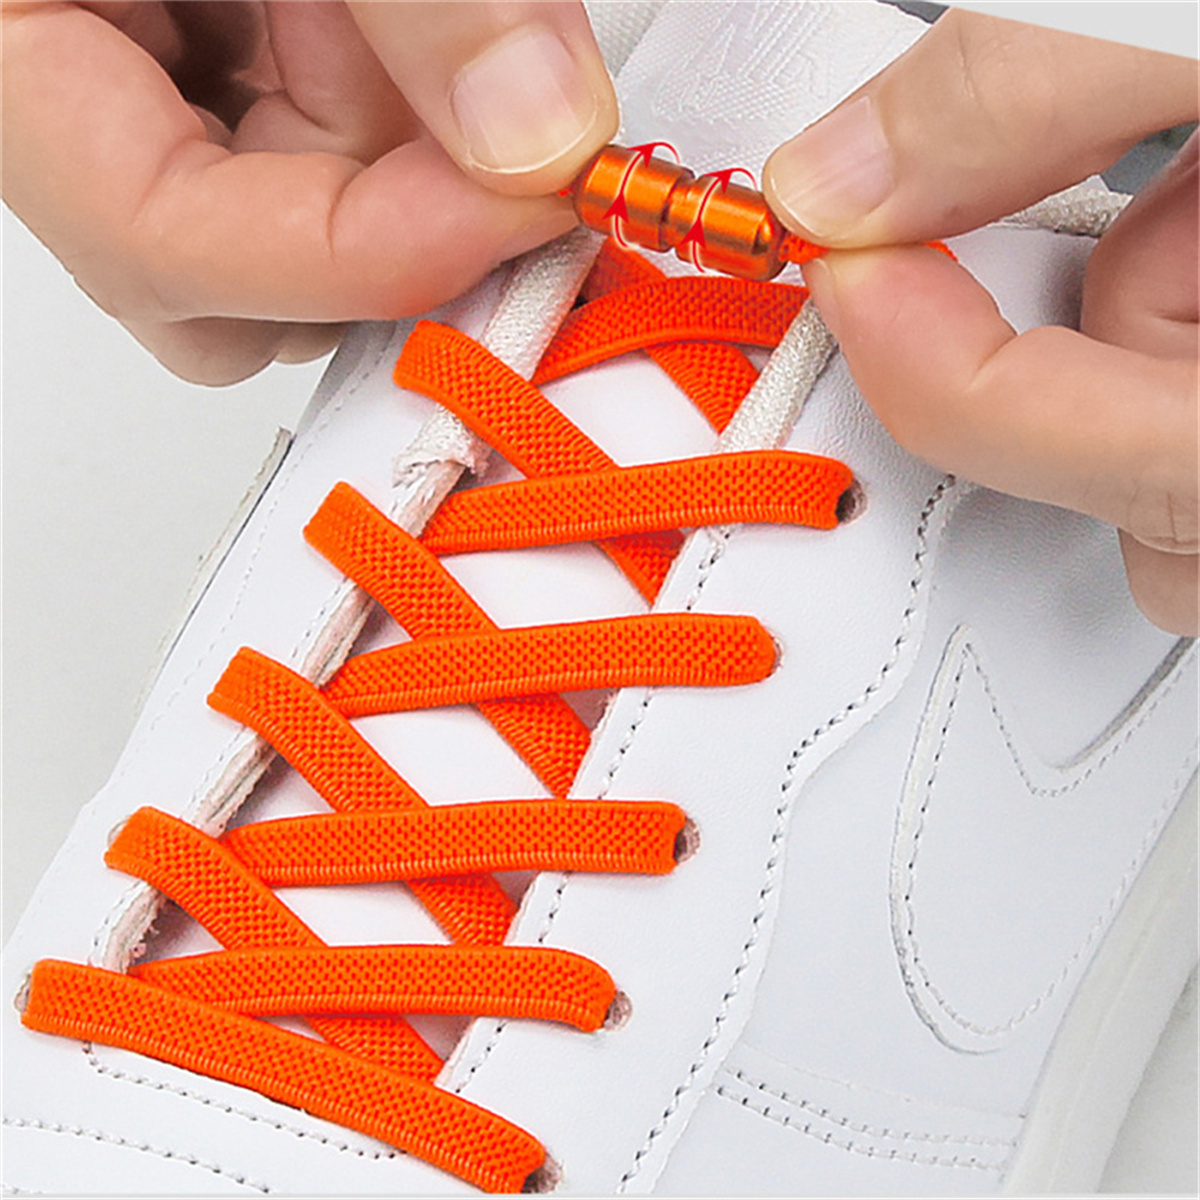 12 Colors Elastic No-Tie Shoelaces with Magnetic Metal Lock